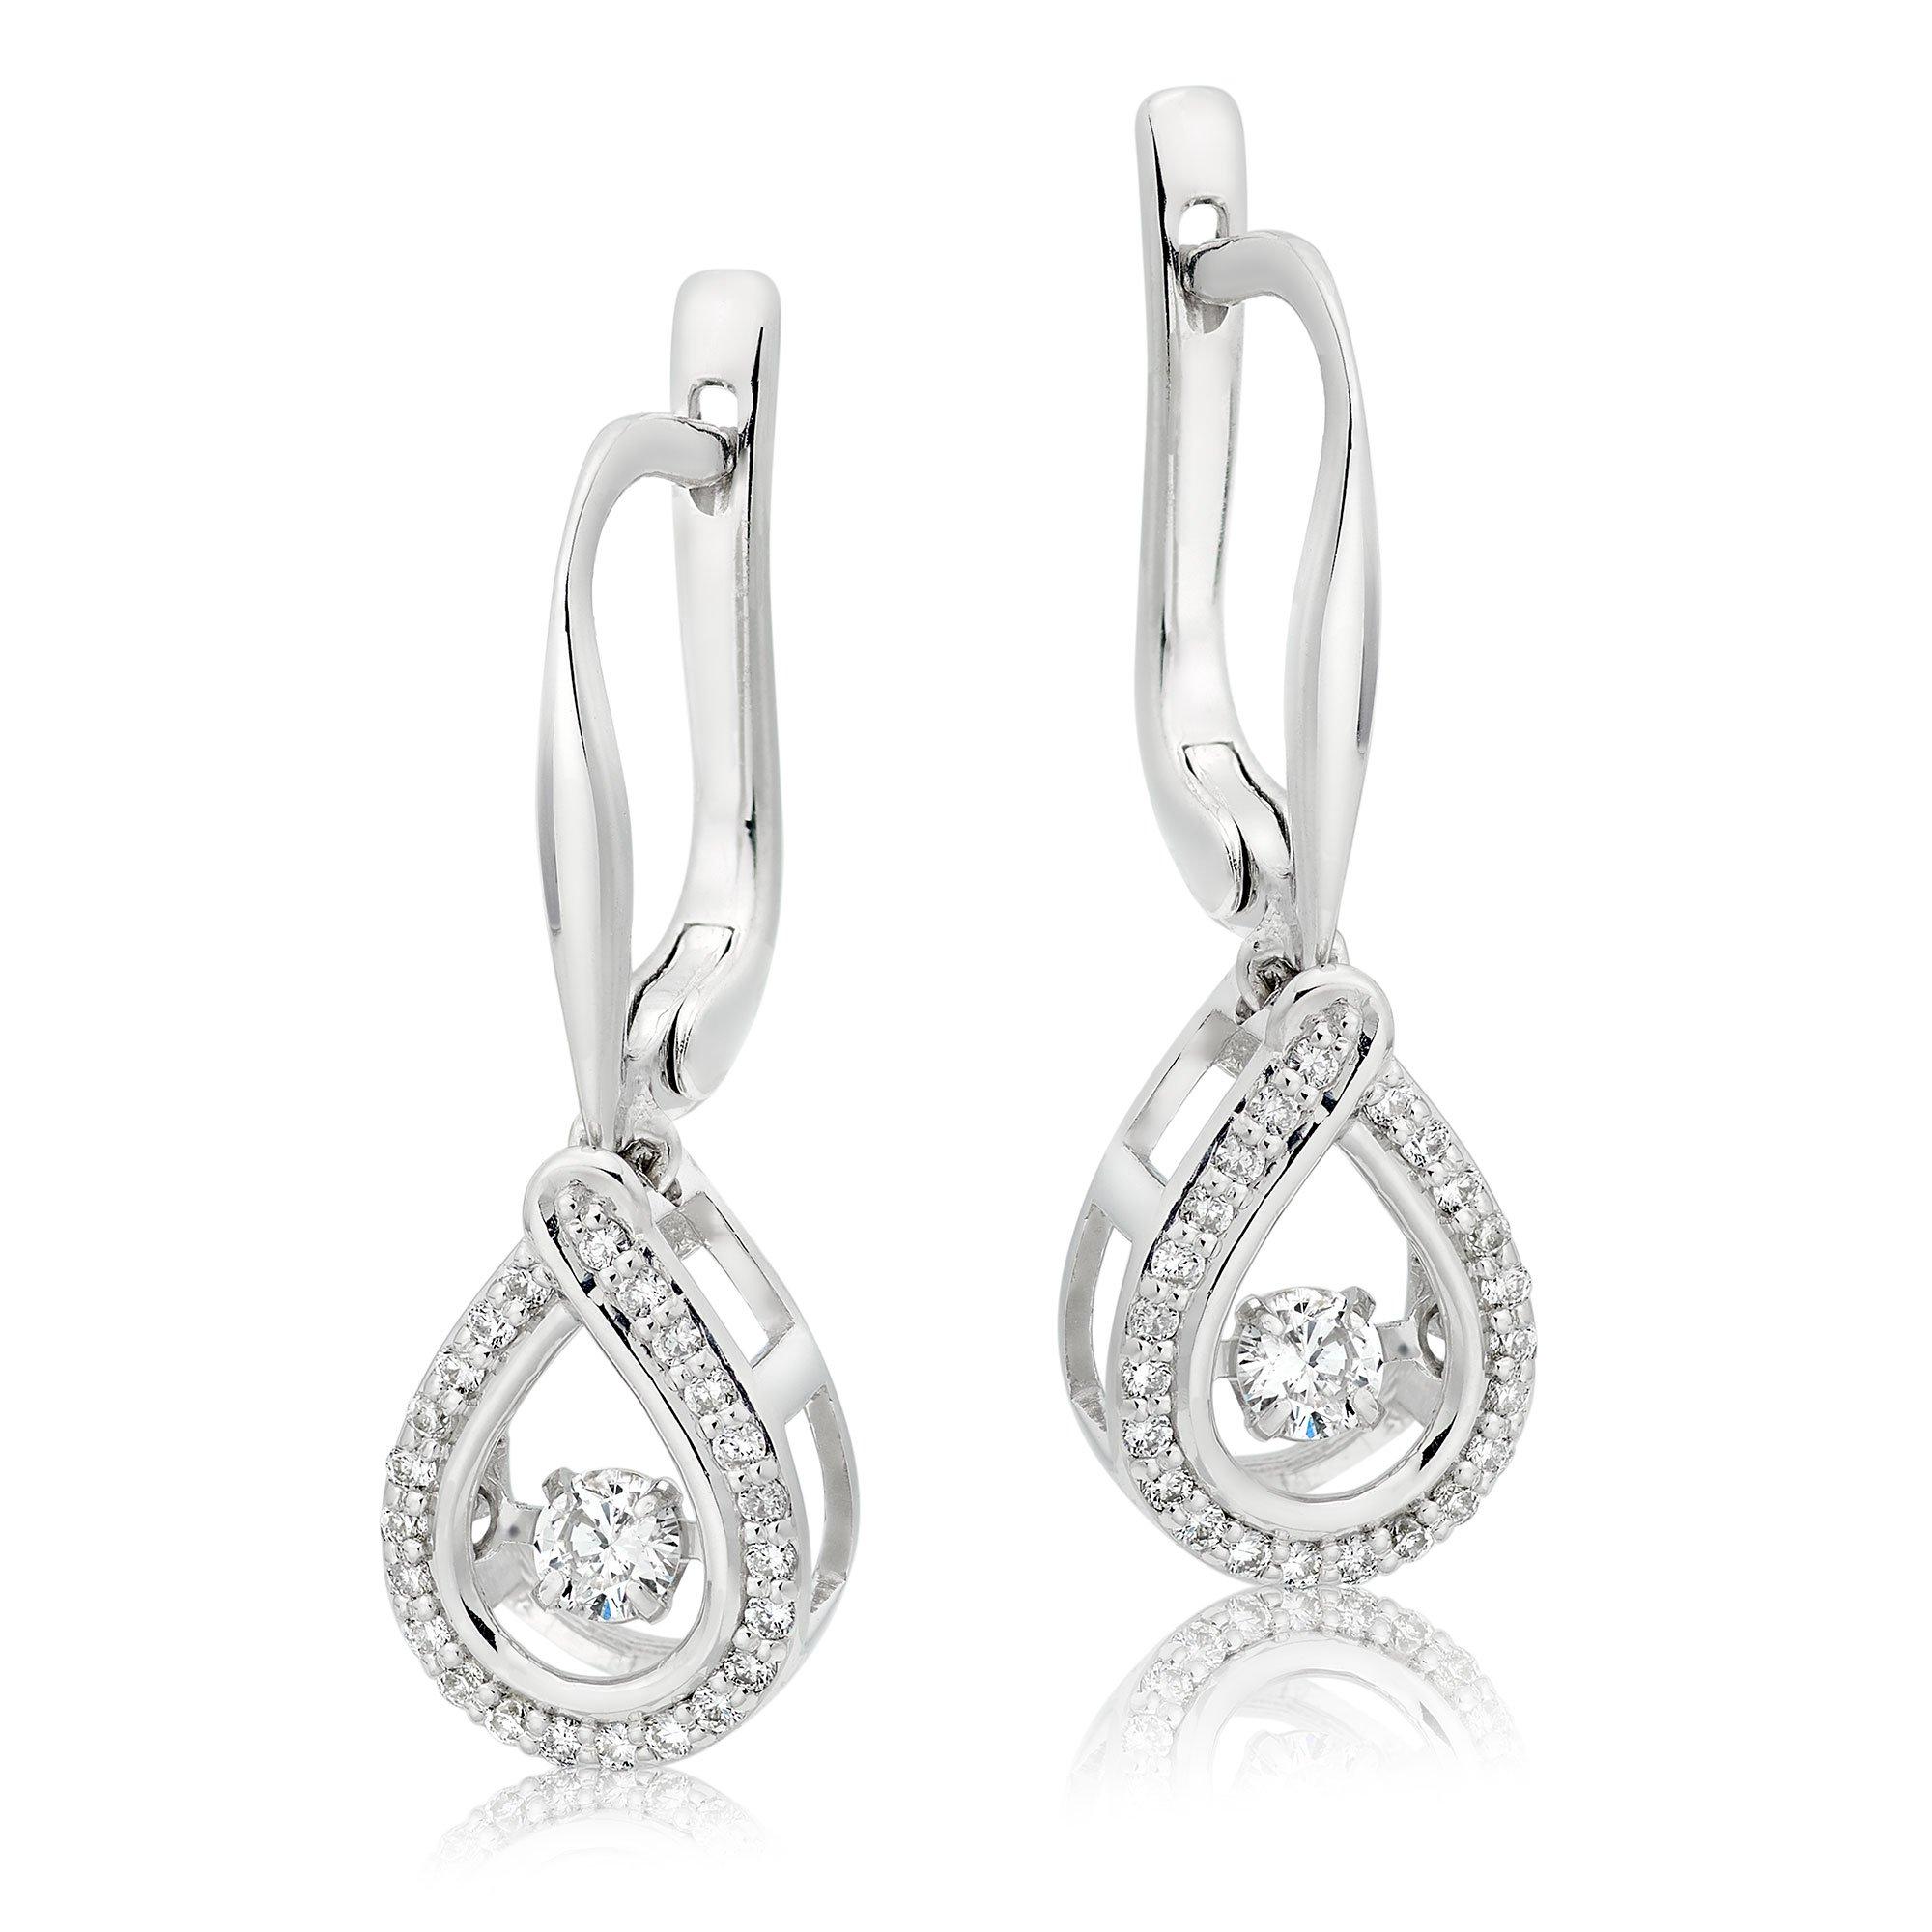 Dance 9ct White Gold Diamond Drop Earrings